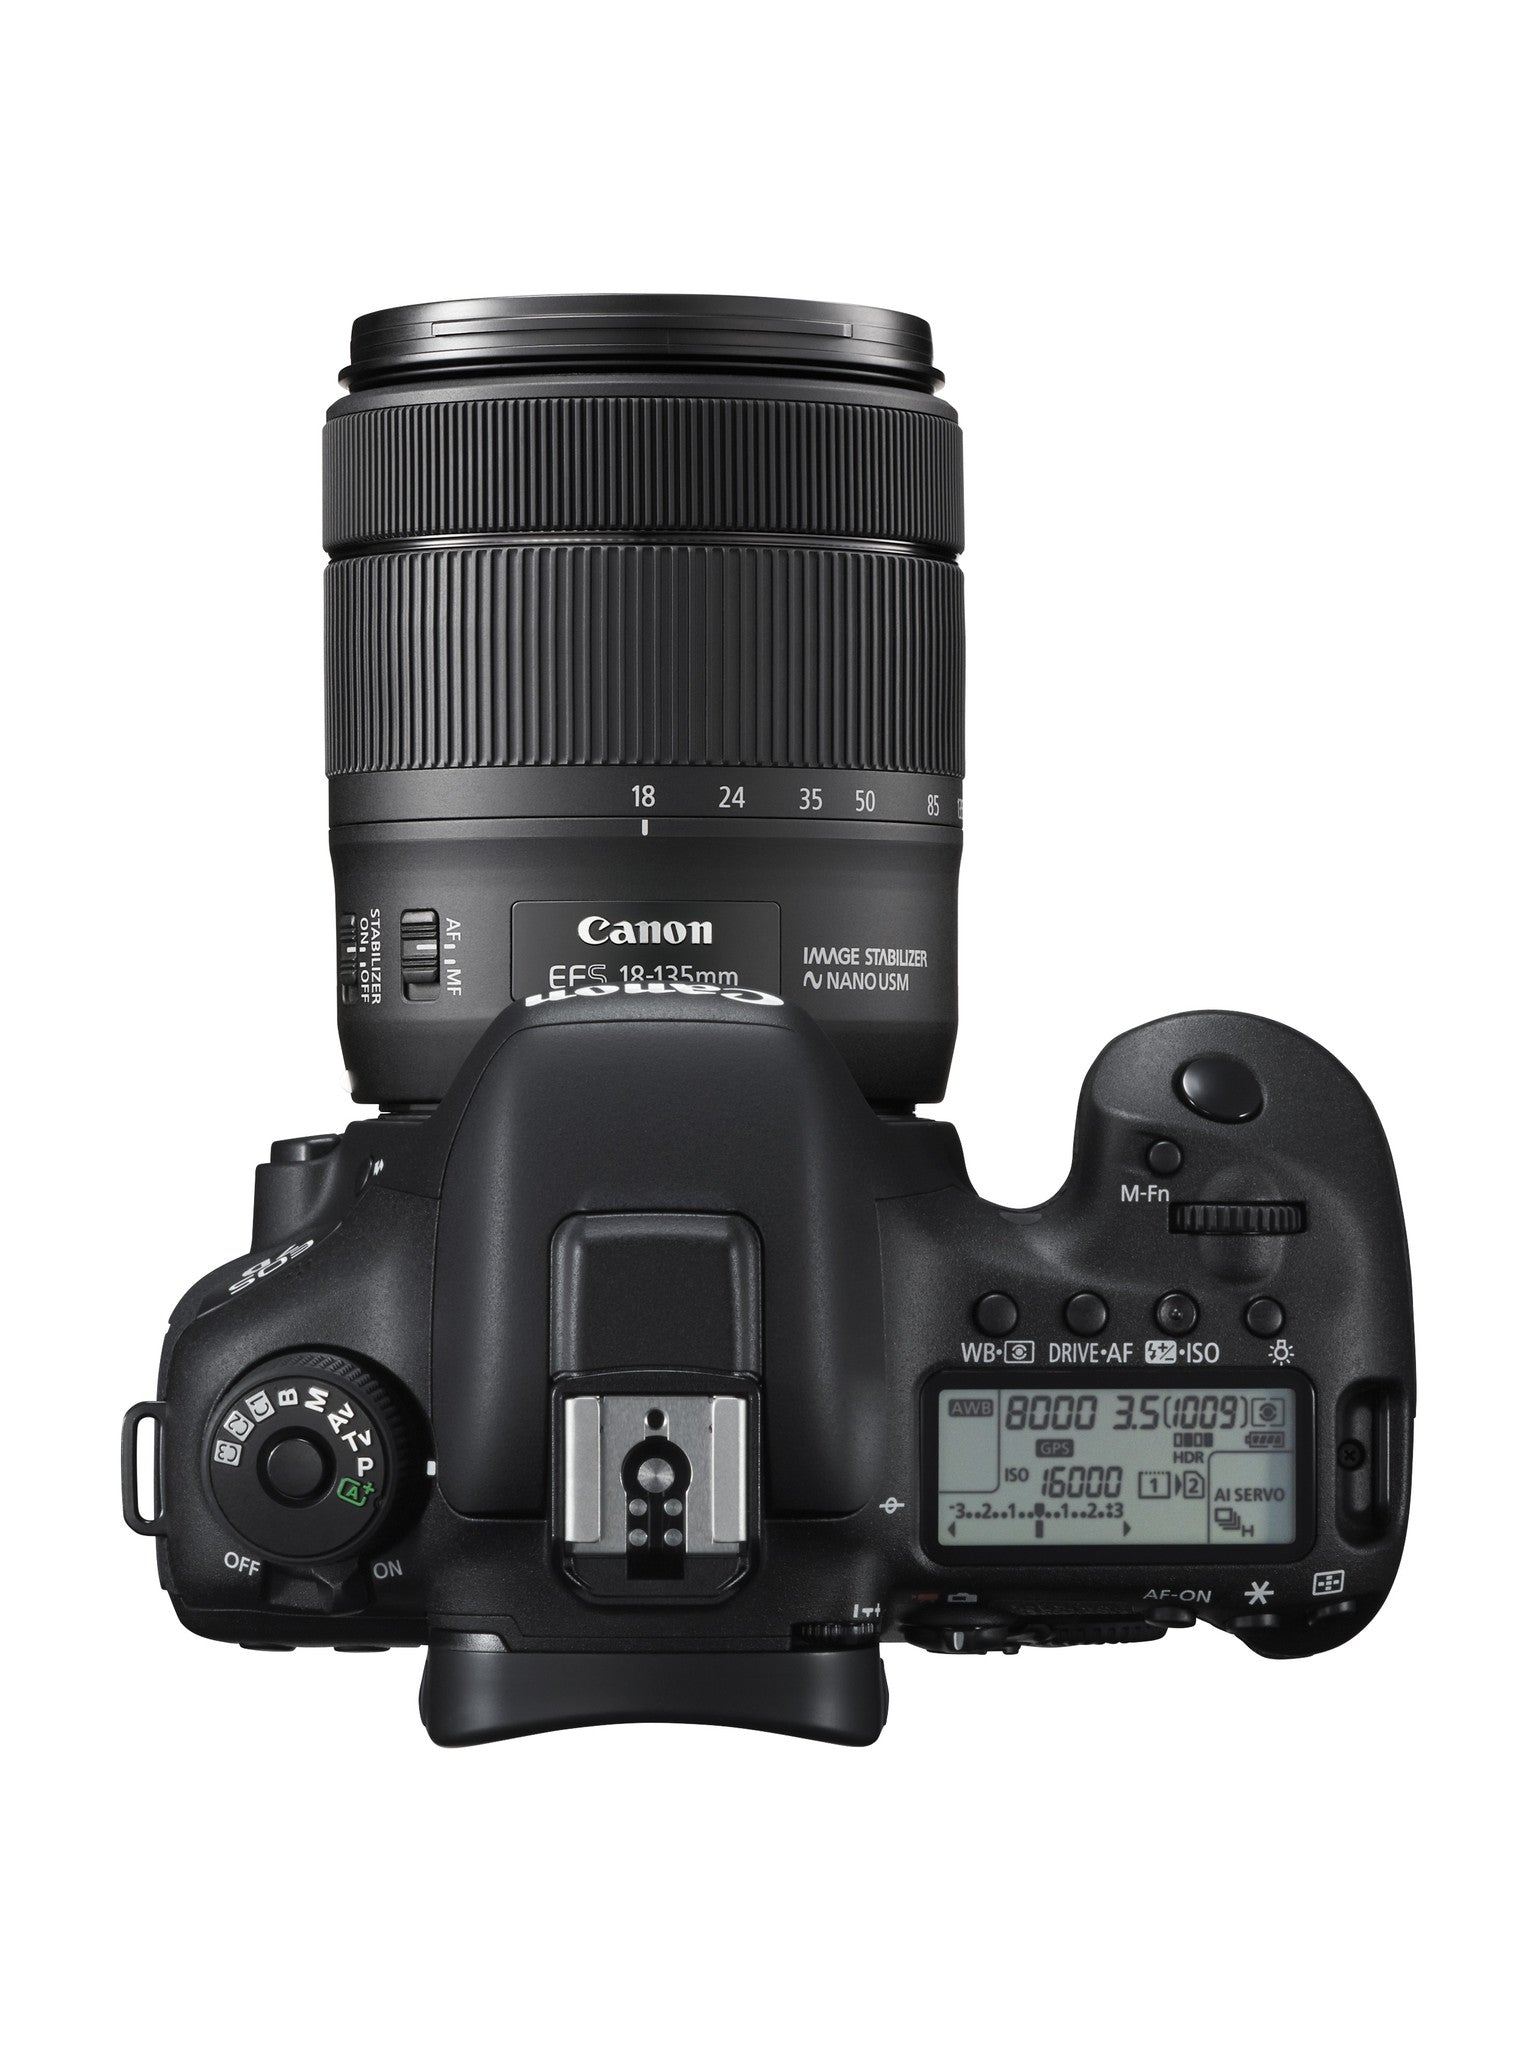 Canon EOS 7D Mark II EF-S 18-135mm f/3.5-5.6 IS USM Digital SLR Camera Wi-Fi Adapter Kit, camera dslr cameras, Canon - Pictureline  - 3